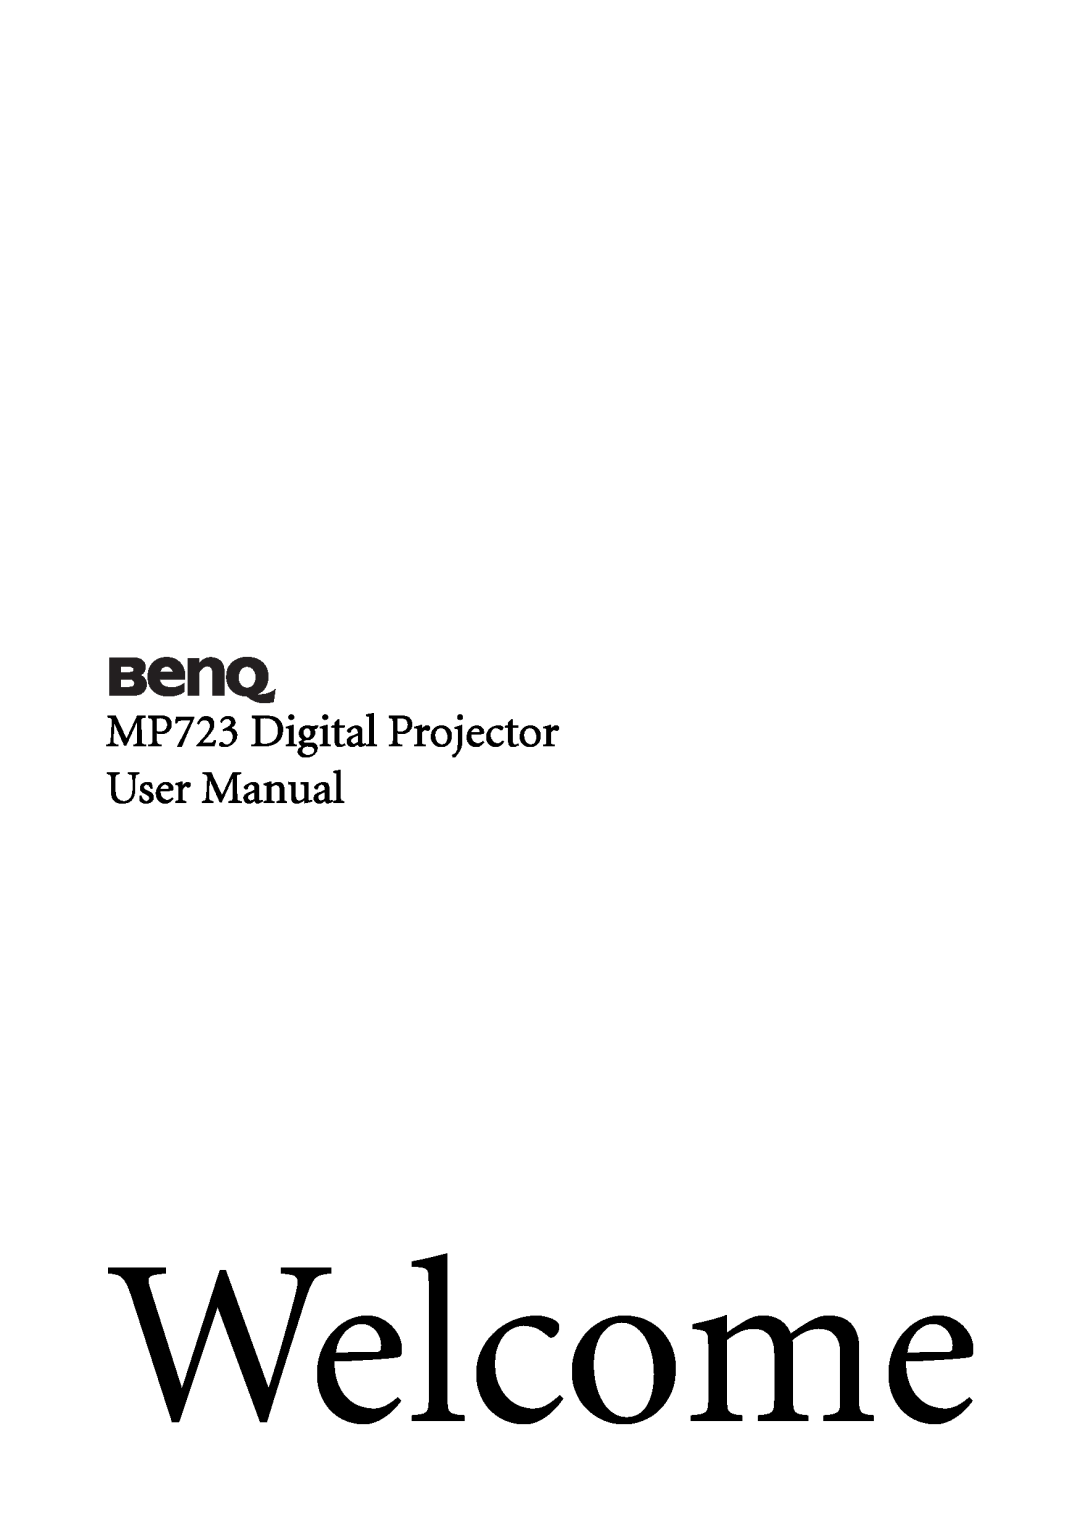 BenQ user manual Welcome, MP723 Digital Projector User Manual 